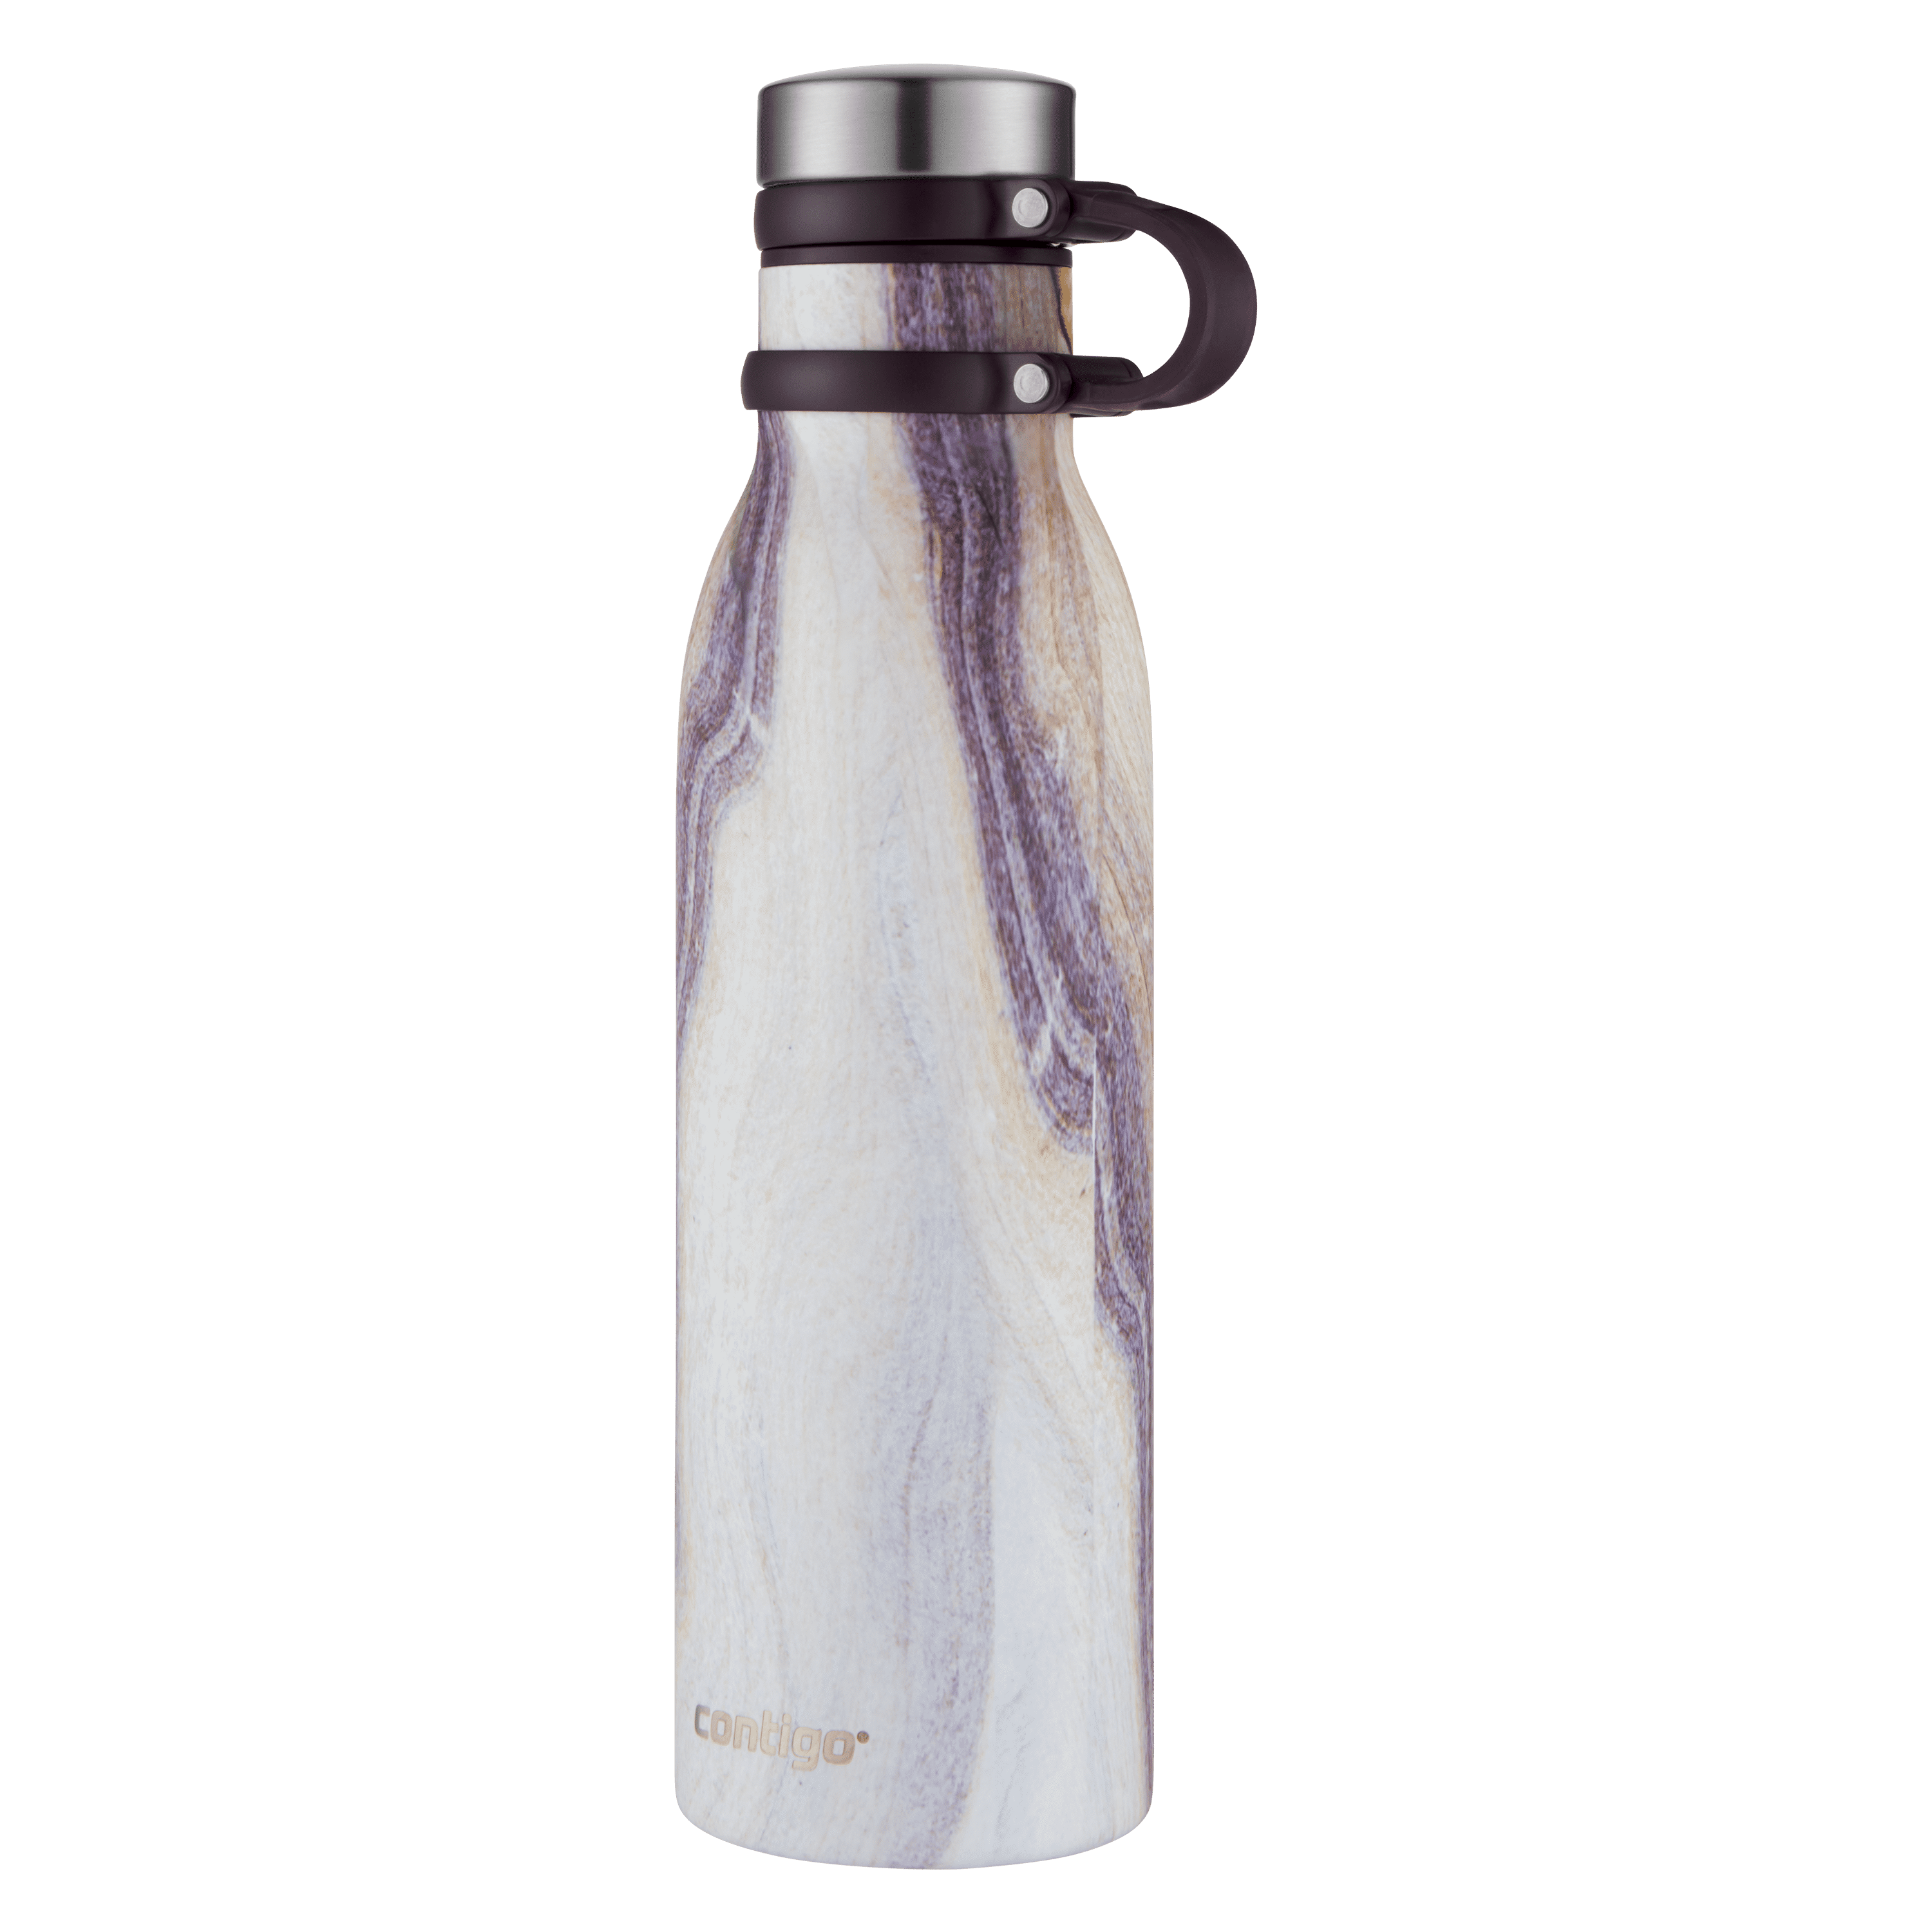 Contigo Couture Matterhorn Stainless Steel Water Bottle - White Marble, 1  ct - Kroger